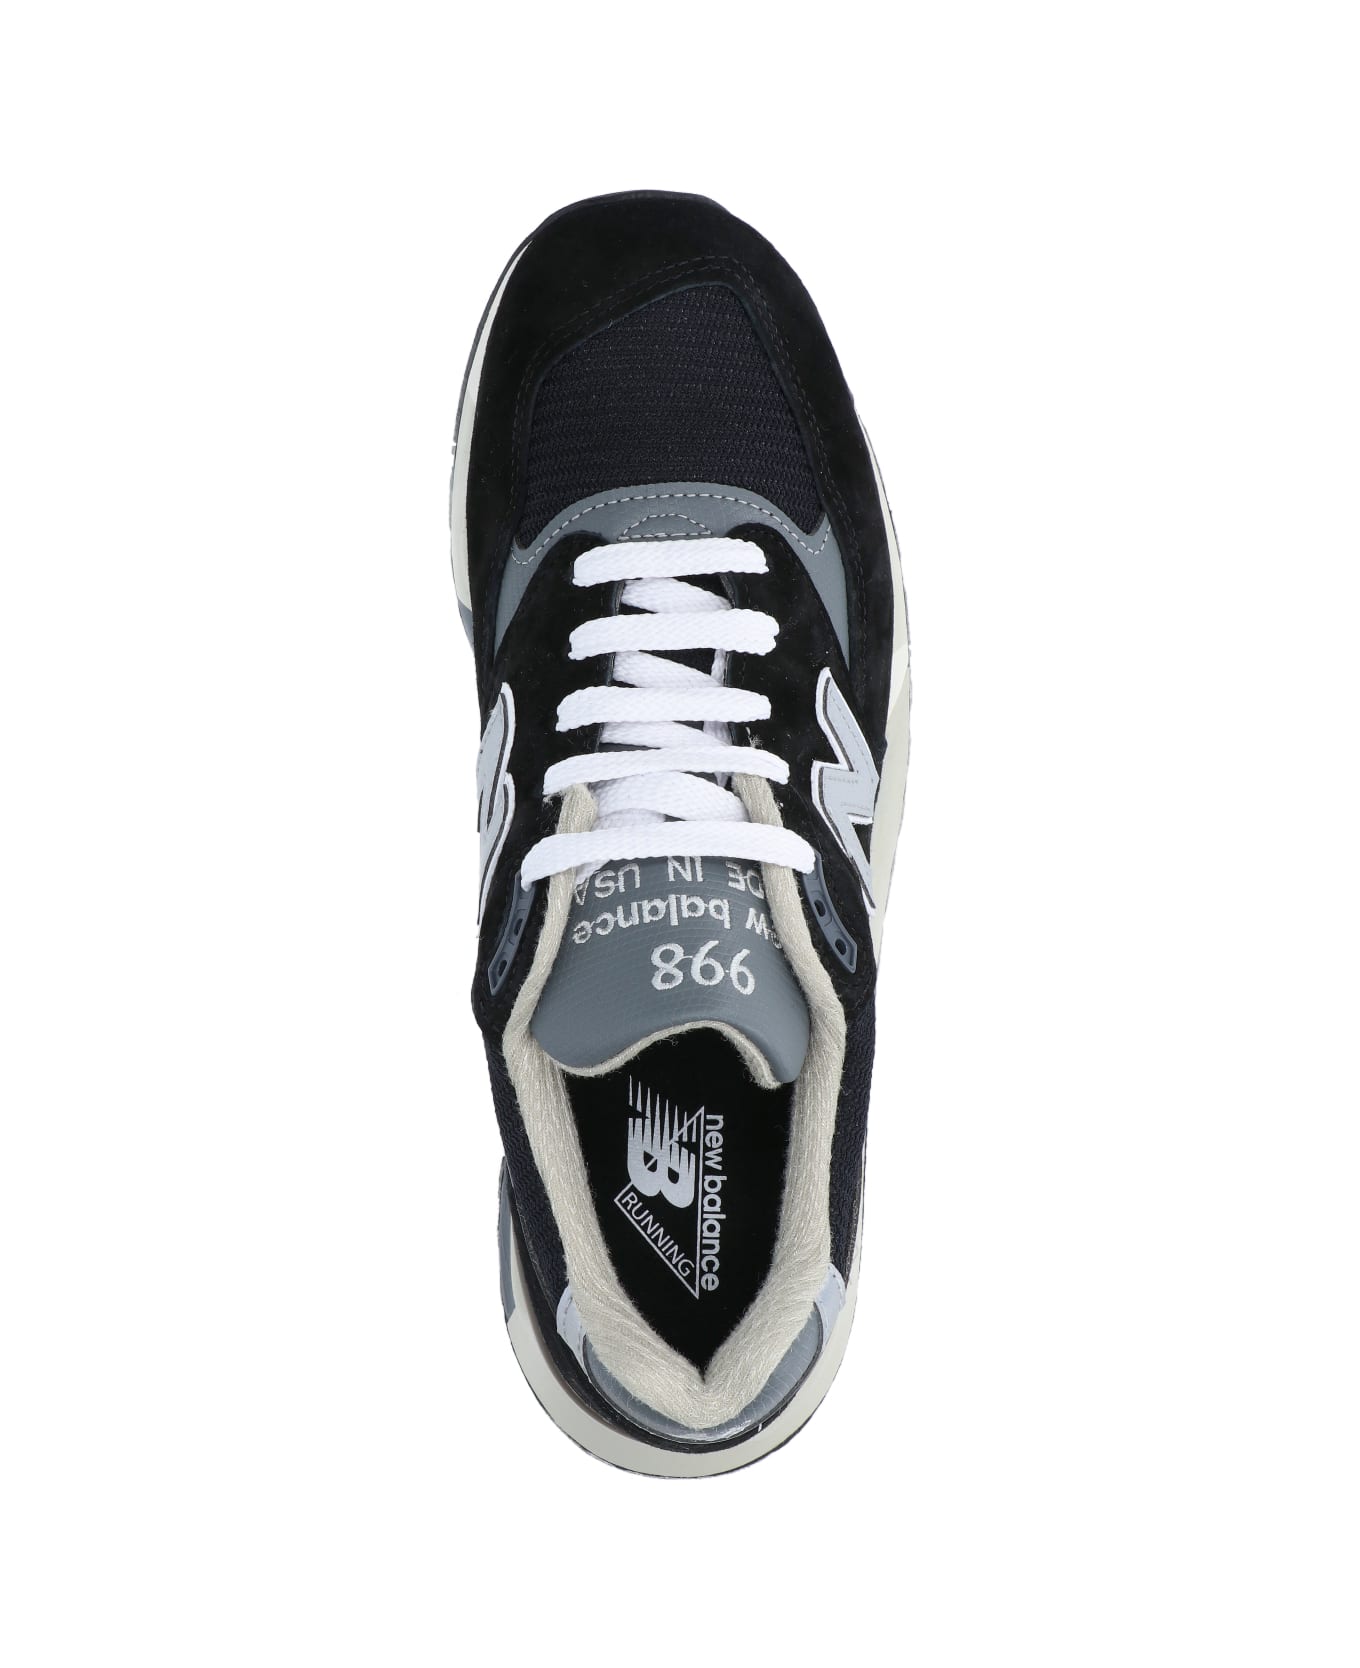 New Balance "998 Core" Sneakers - Black   スニーカー